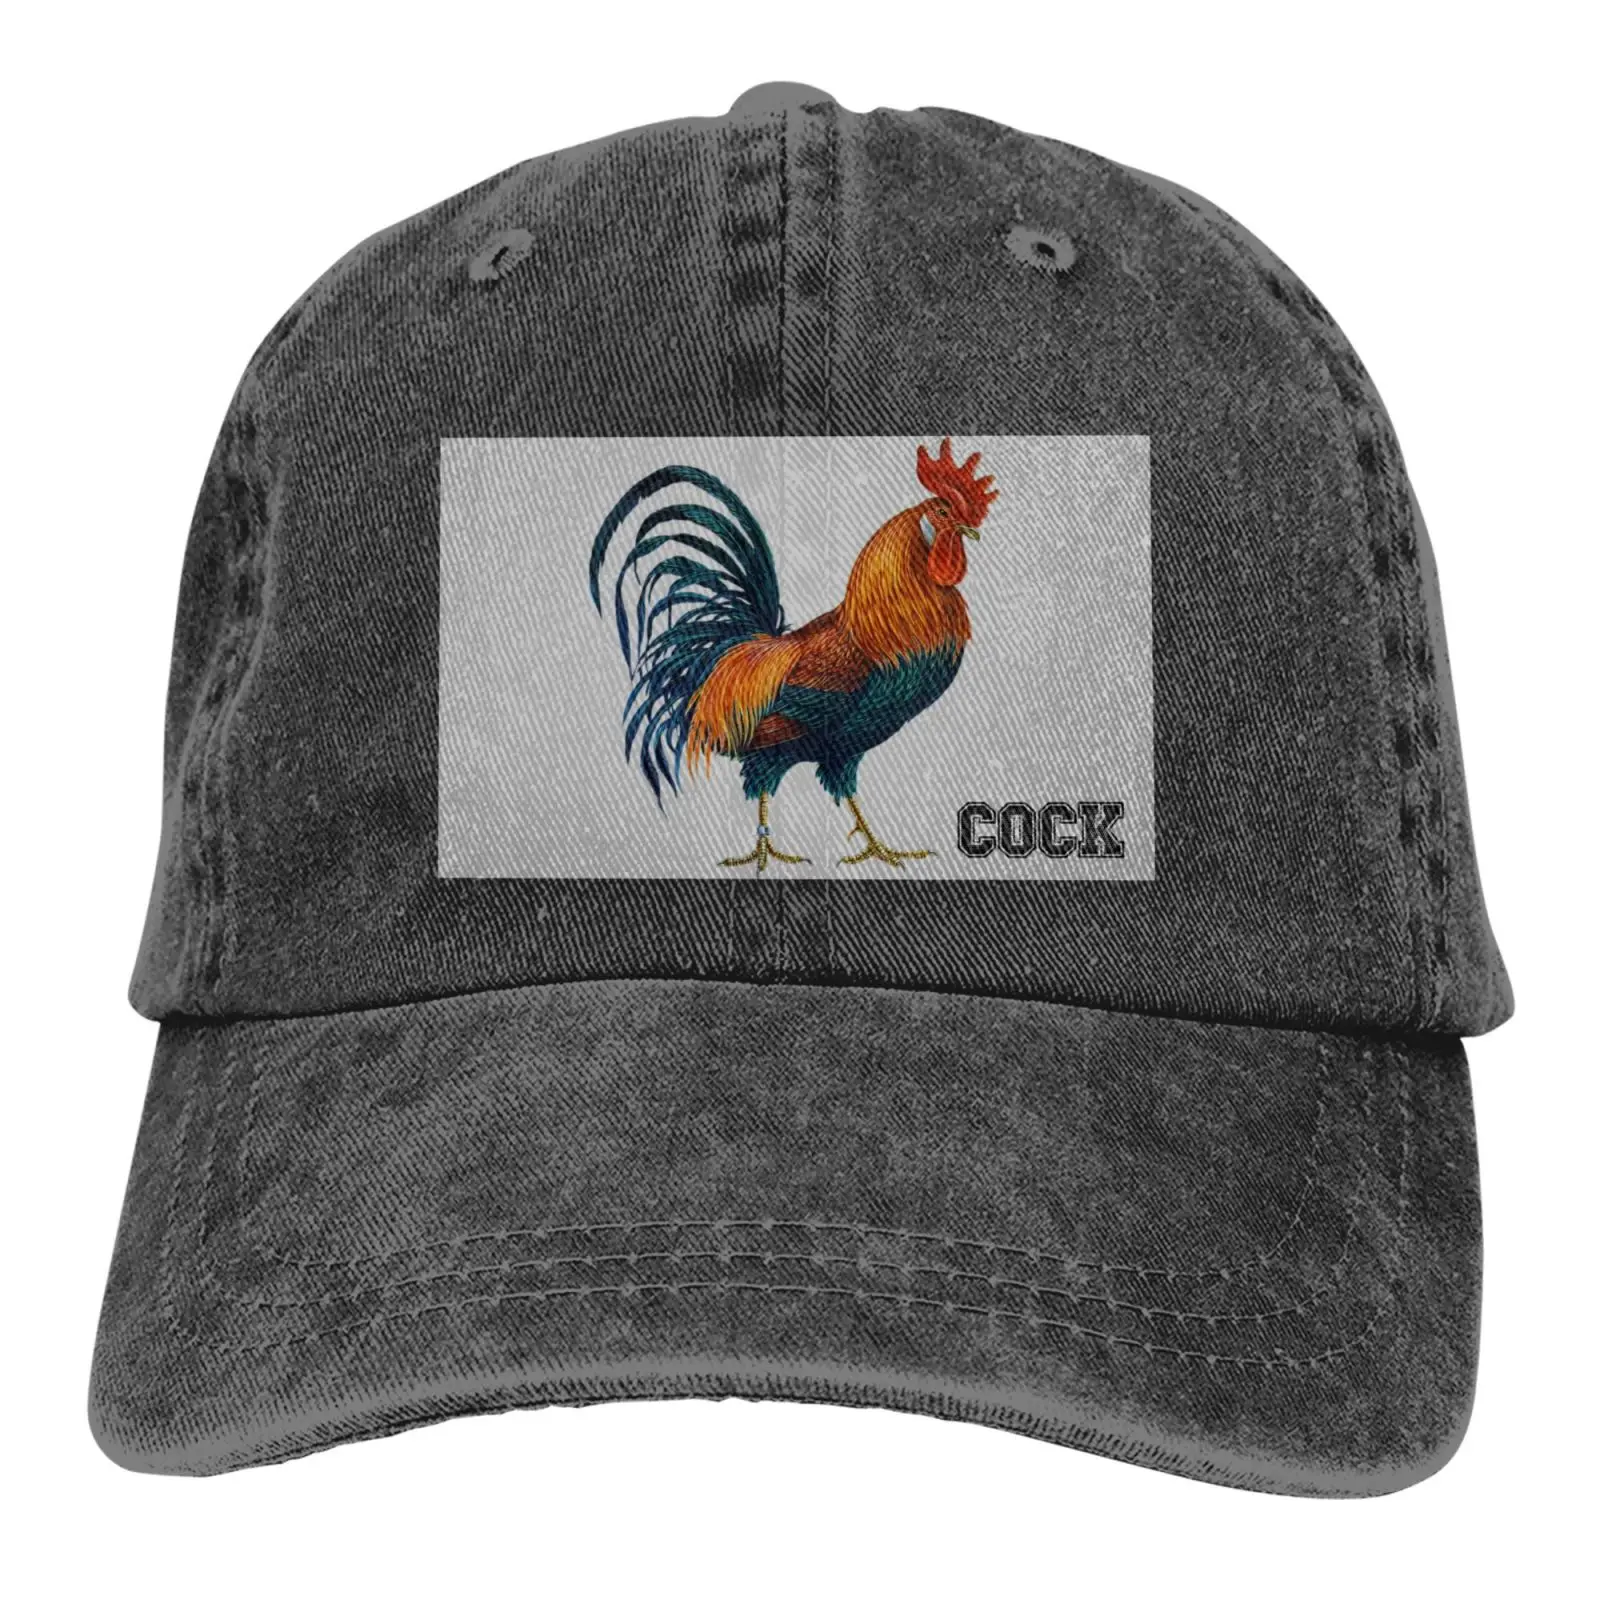 Unisex Animal Trucker Hat Vintage Cock Cowboy Hats Washed Adjustable Cartoon Baseball Caps